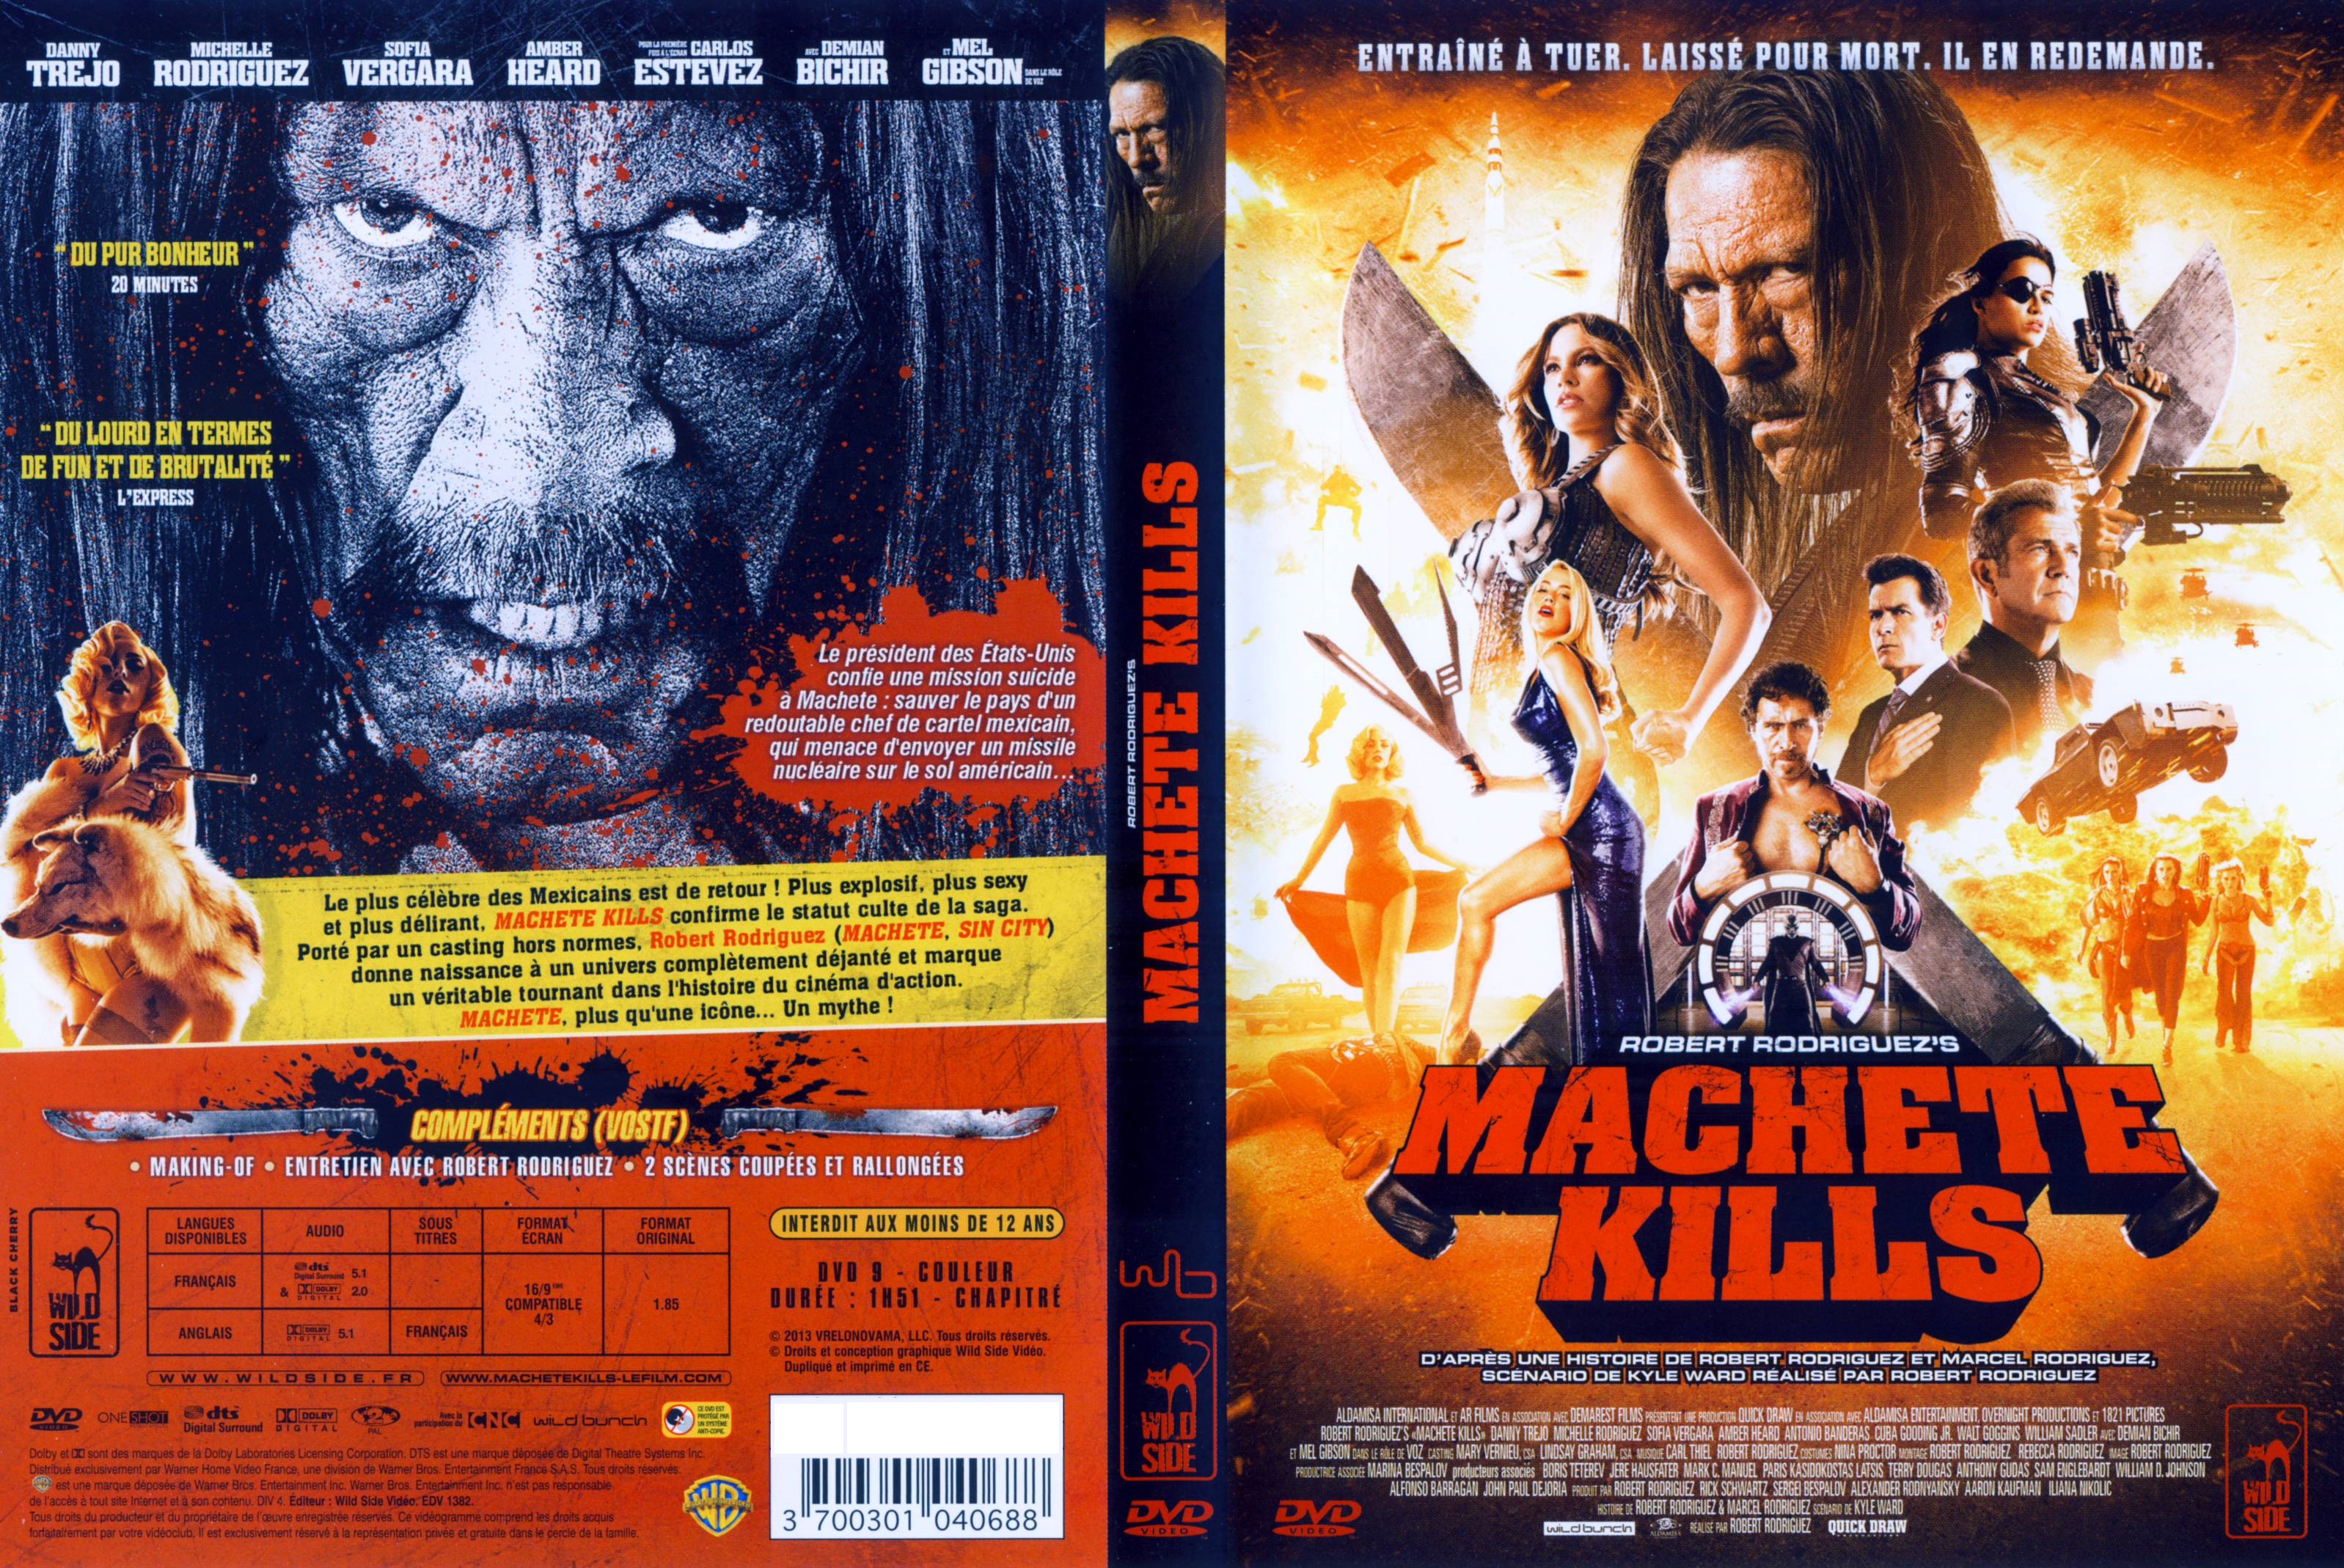 Jaquette DVD Machete Kills